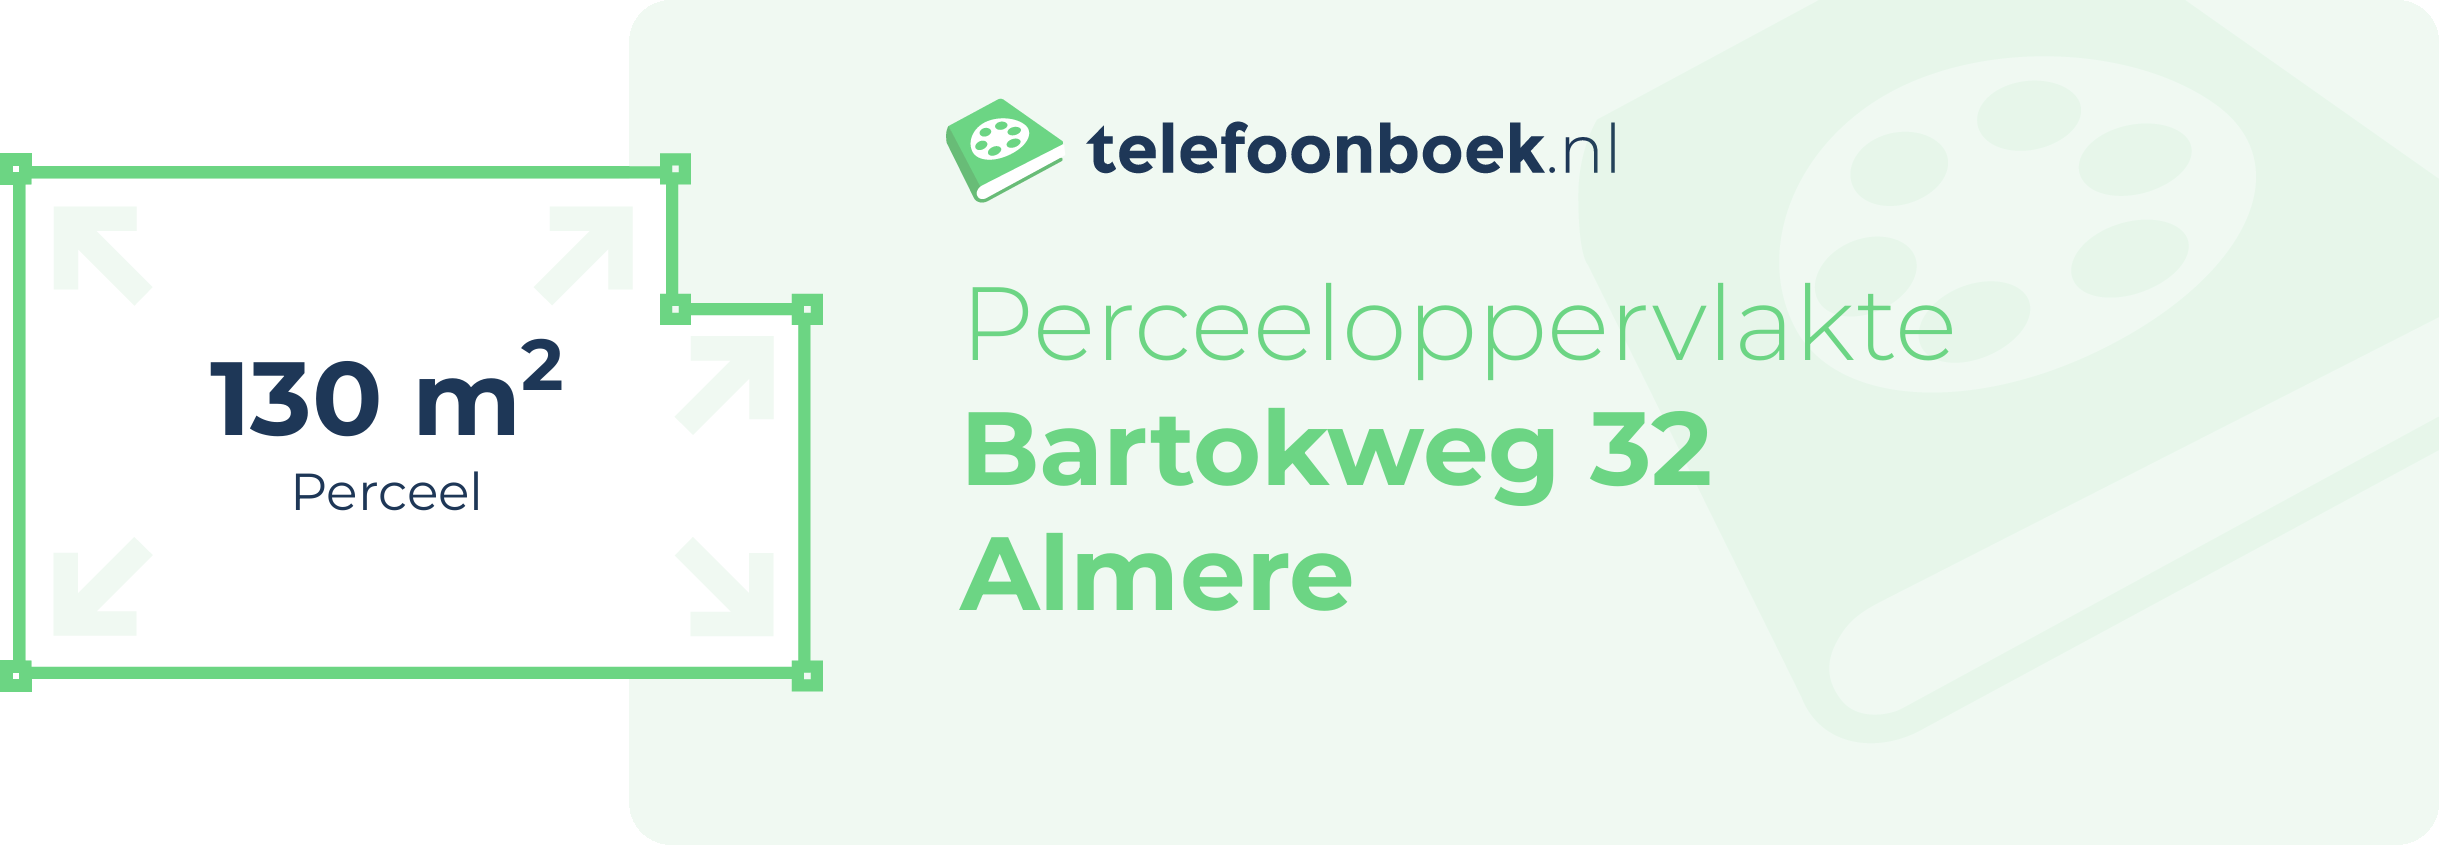 Perceeloppervlakte Bartokweg 32 Almere